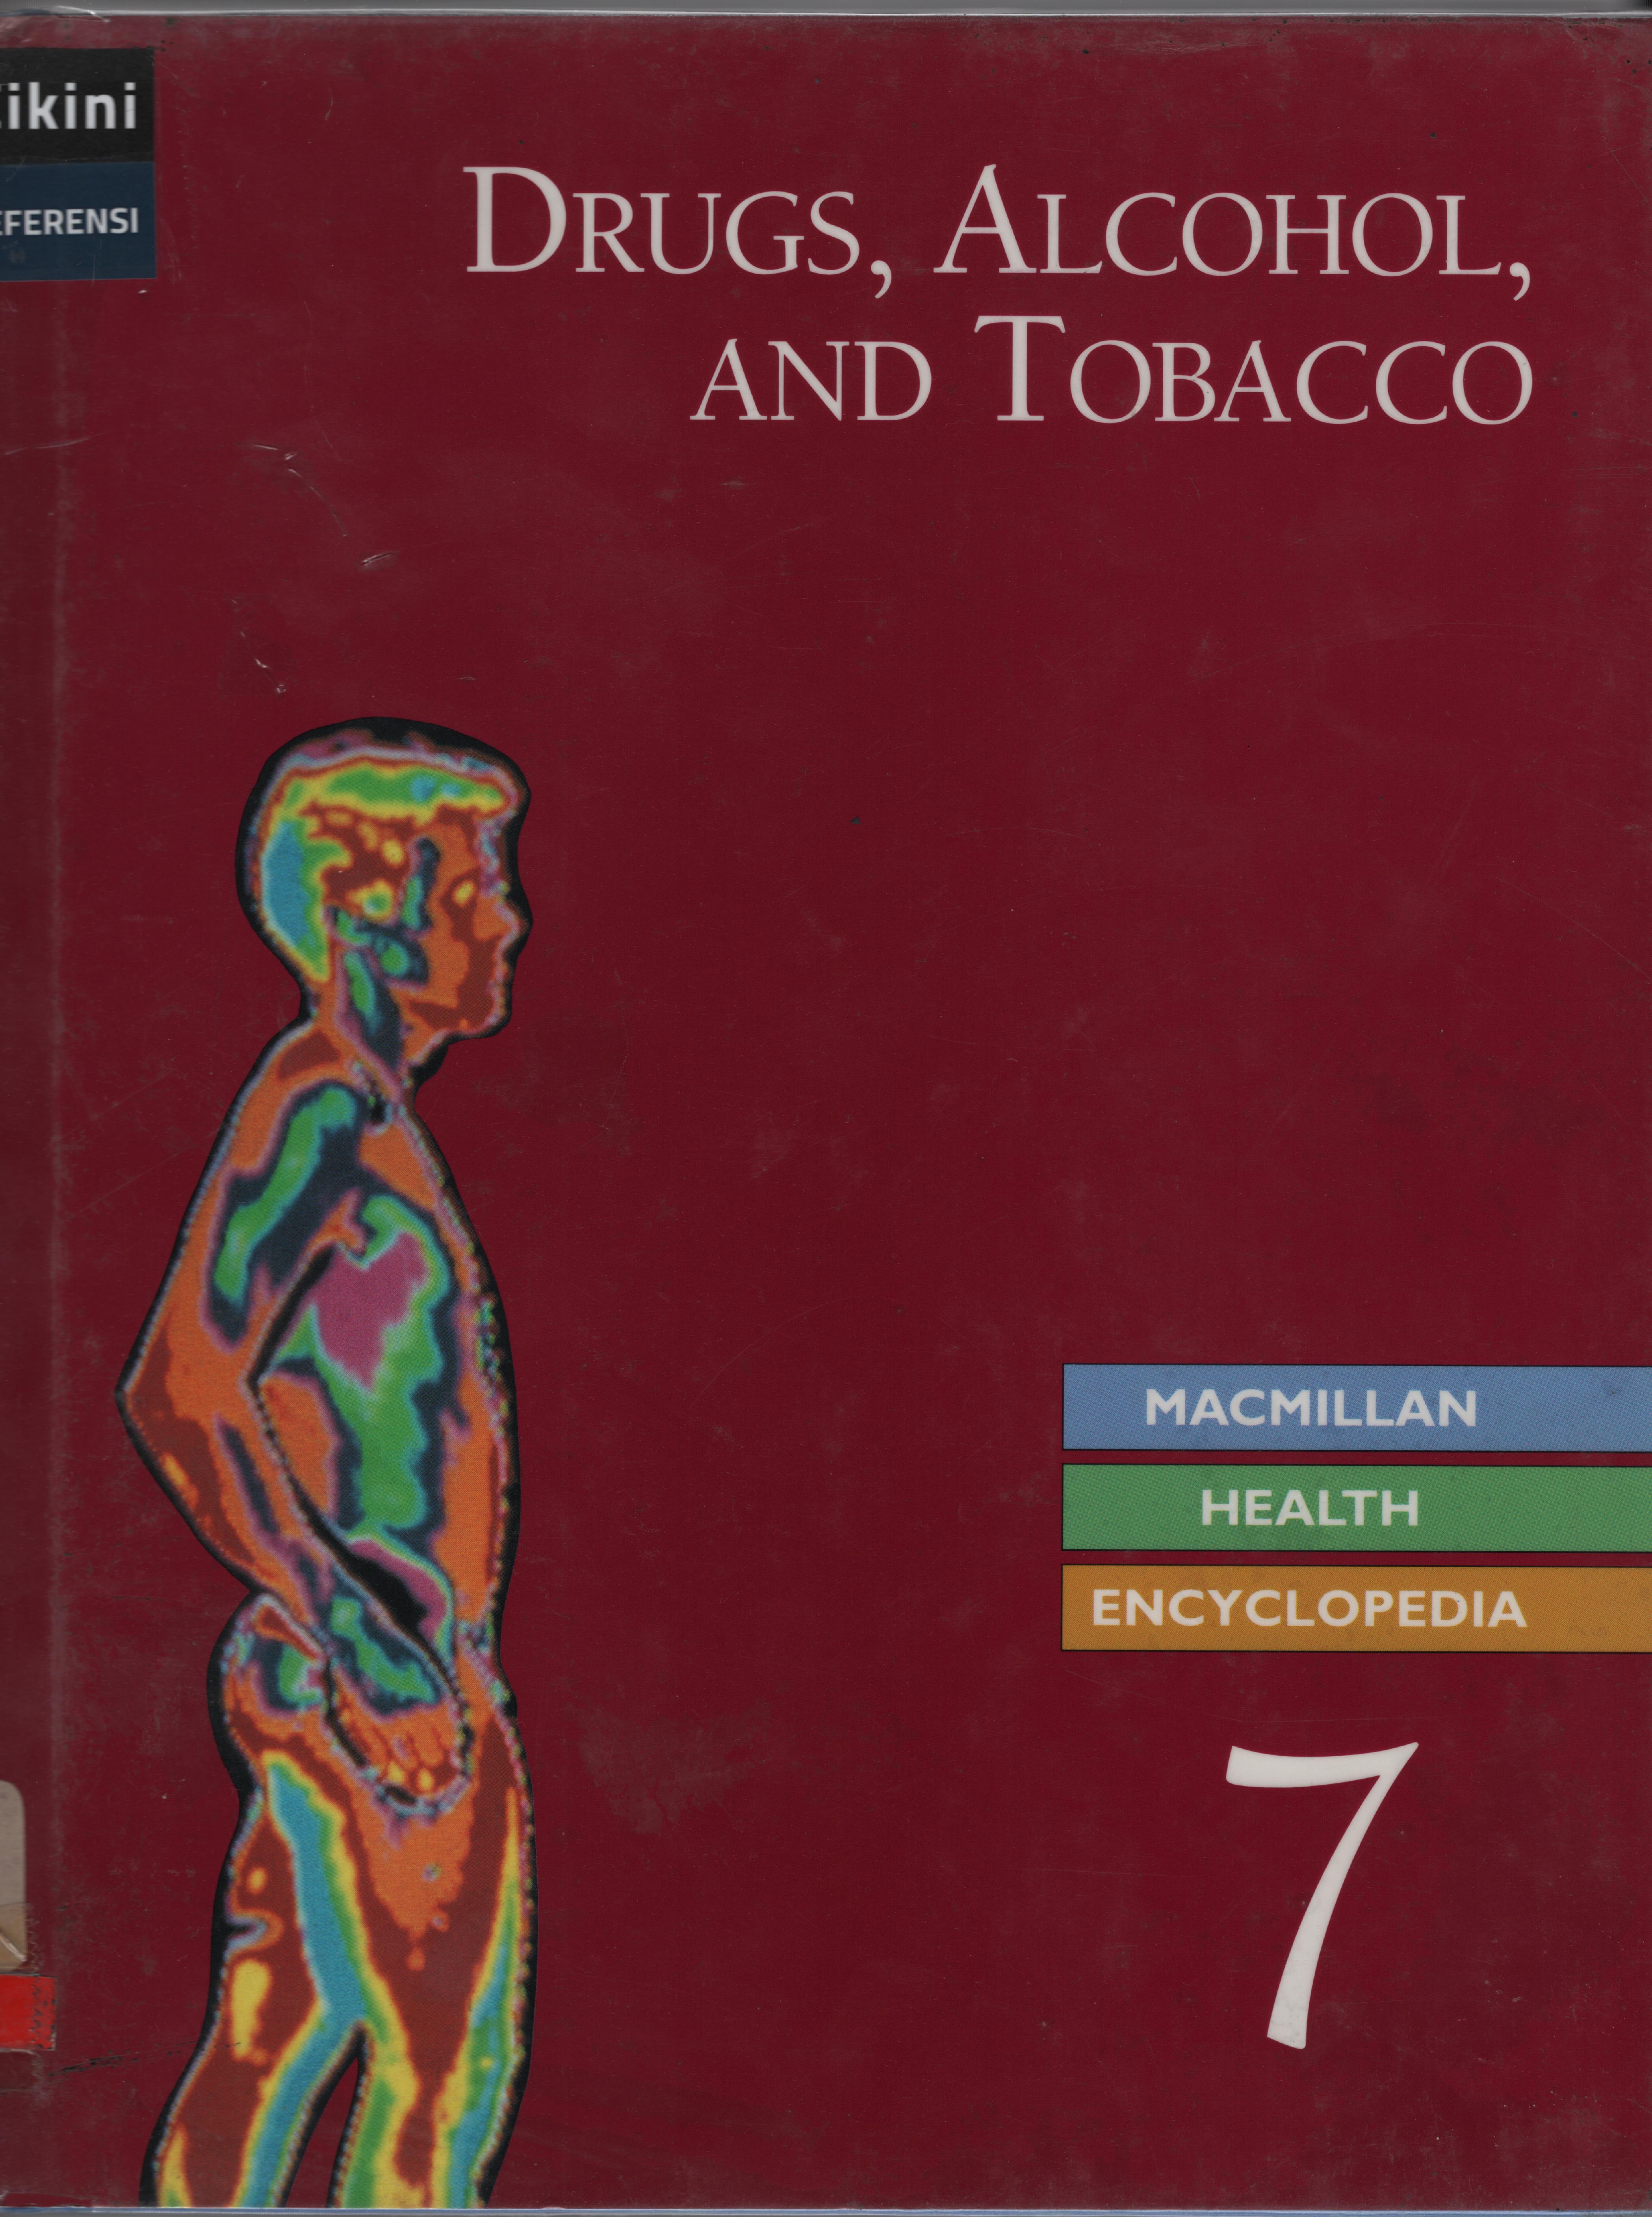 Macmillan health encyclopedia 7 :  drugs, alcohol, and tobacco